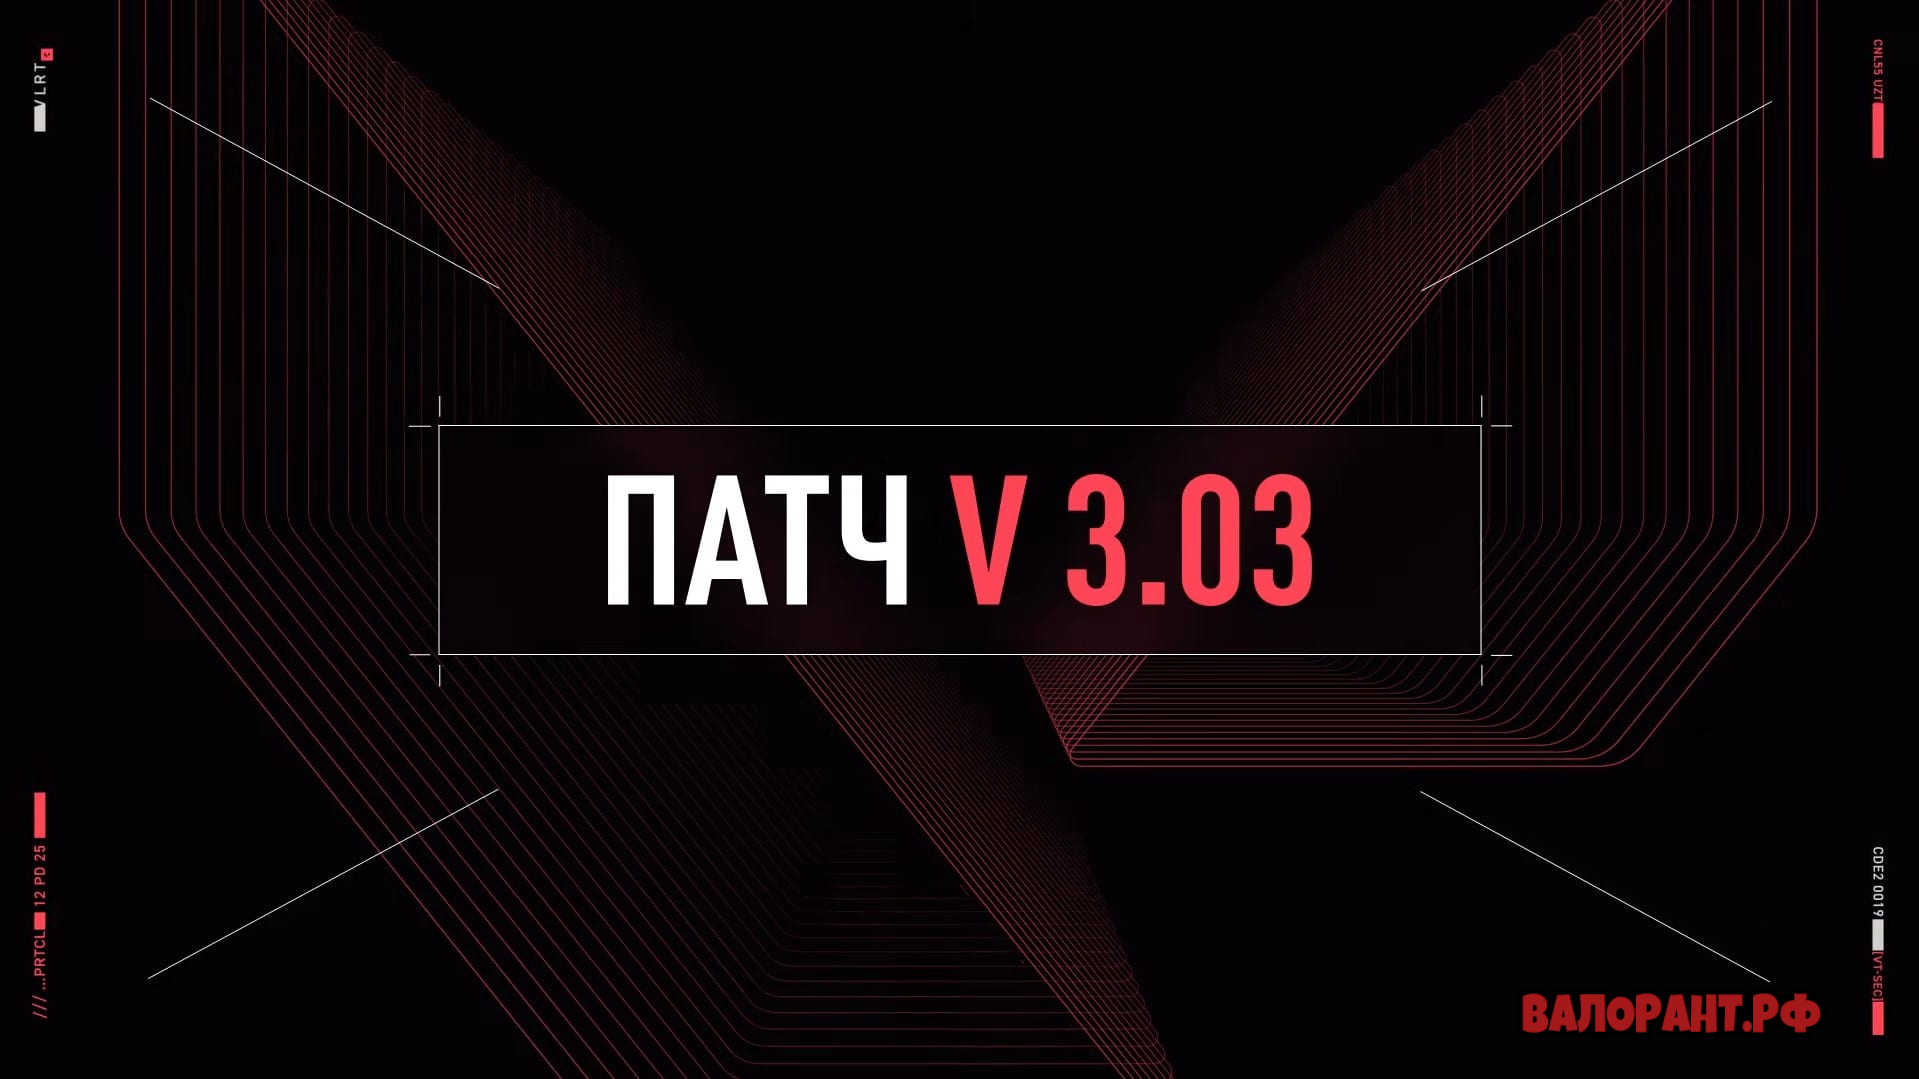 Spisok izmenenij Valorant patch 3.03 preview - Список изменений Валорант - патч 3.03